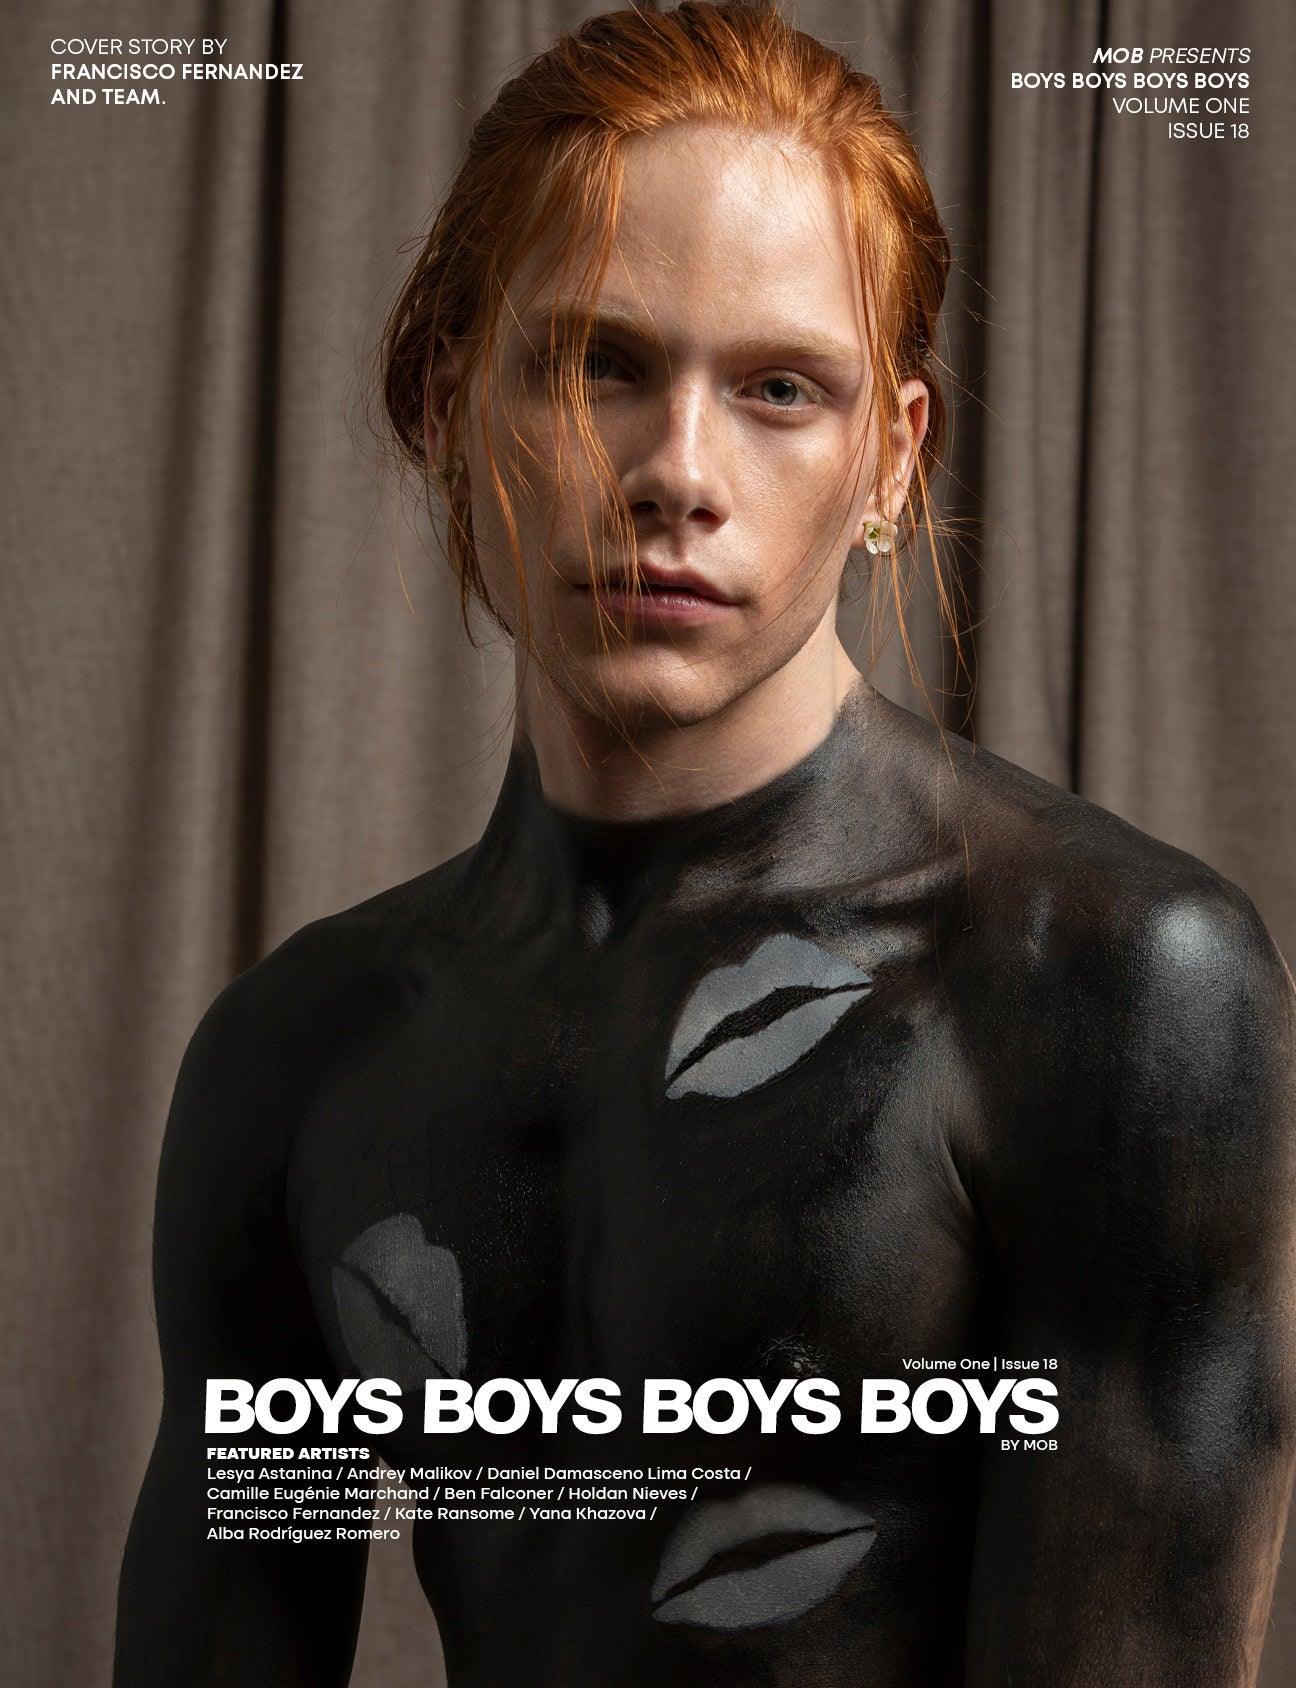 BOYS BOYS BOYS BOYS | VOLUME ONE | ISSUE #18 - Mob Journal